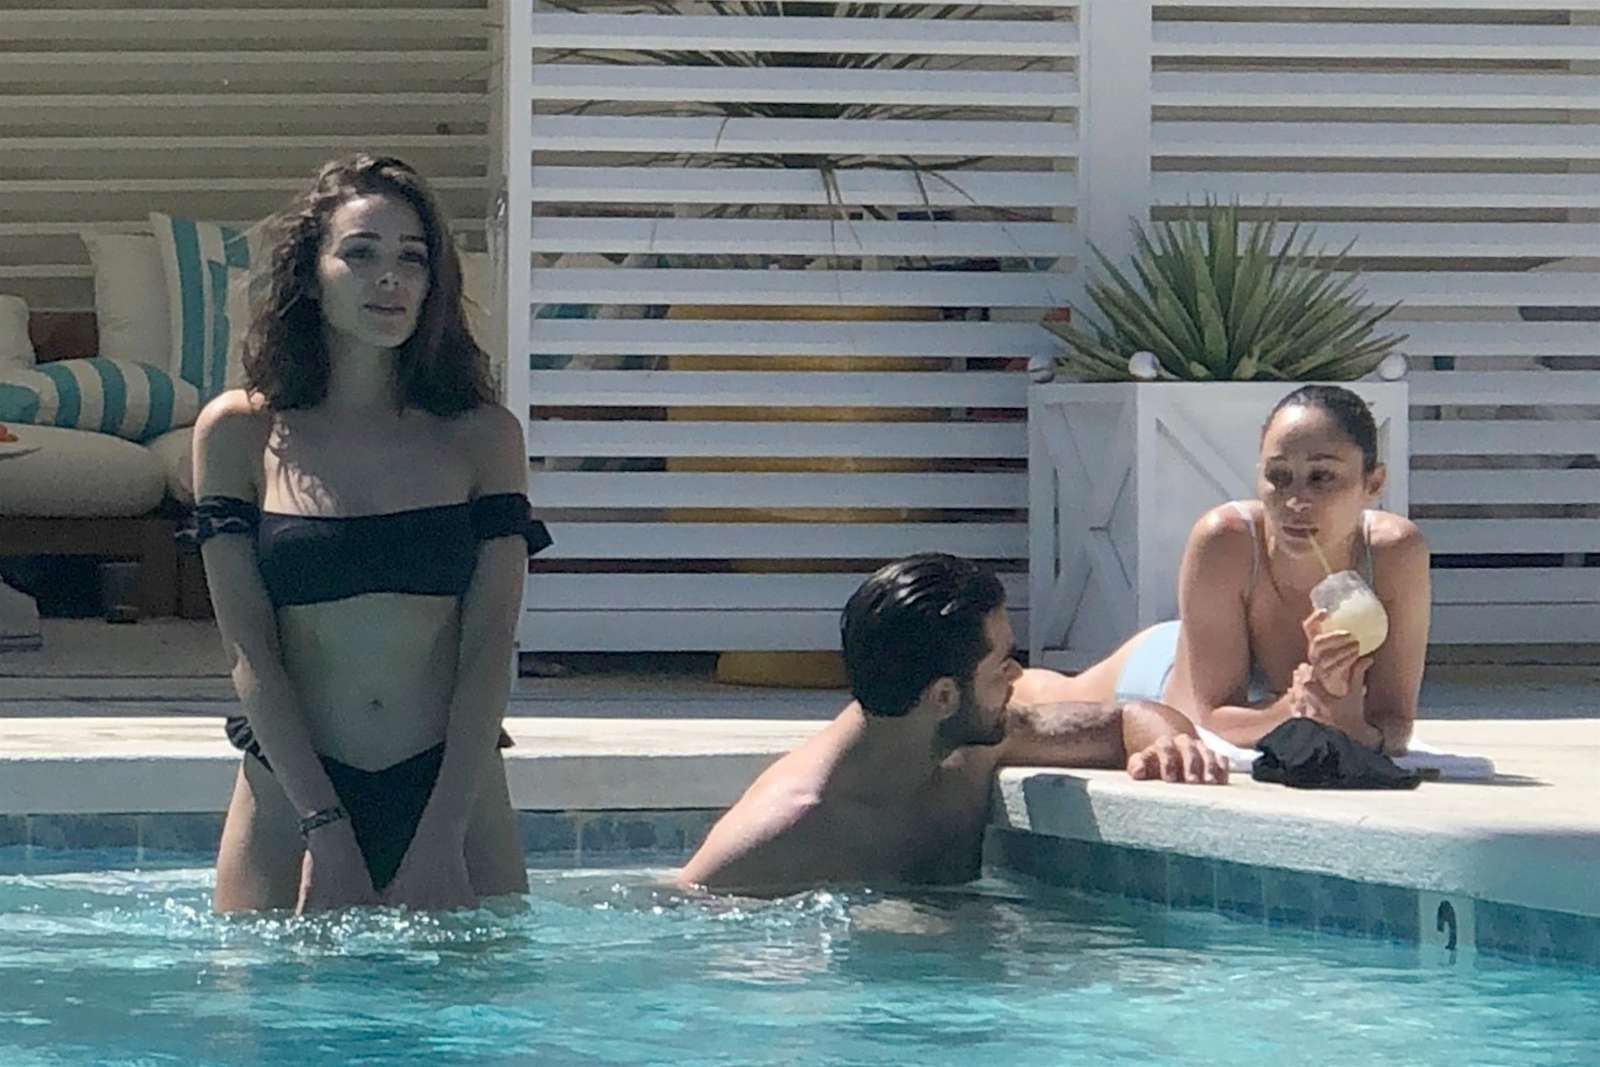 Oliva Culpo and Cara Santana in Bikini on the pool in Palm Springs